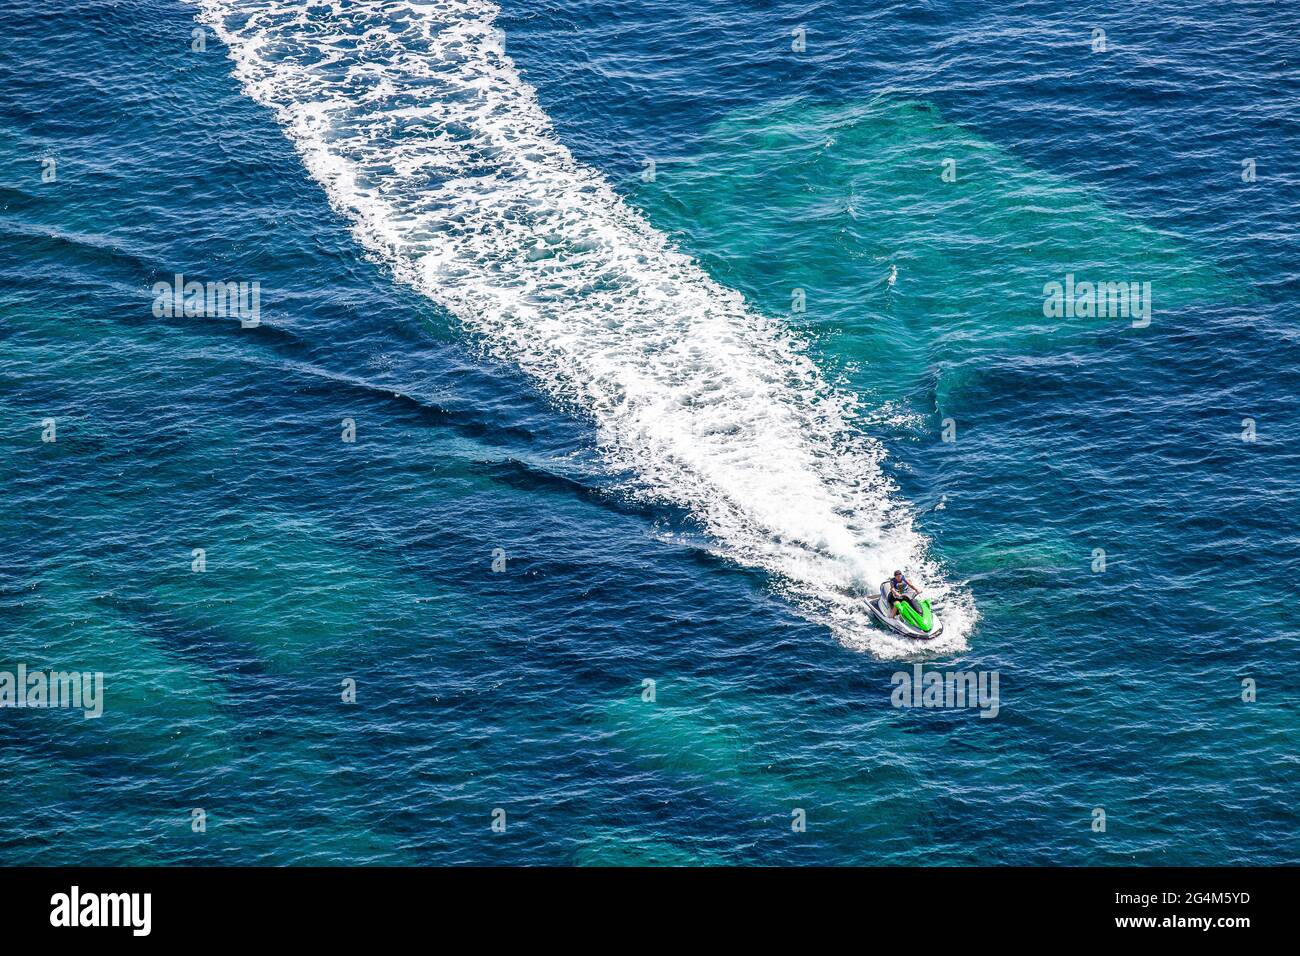 Wake of a Personal Watercraft on the turquoise Sea in Bonifacio, Corsica, France Stockfoto